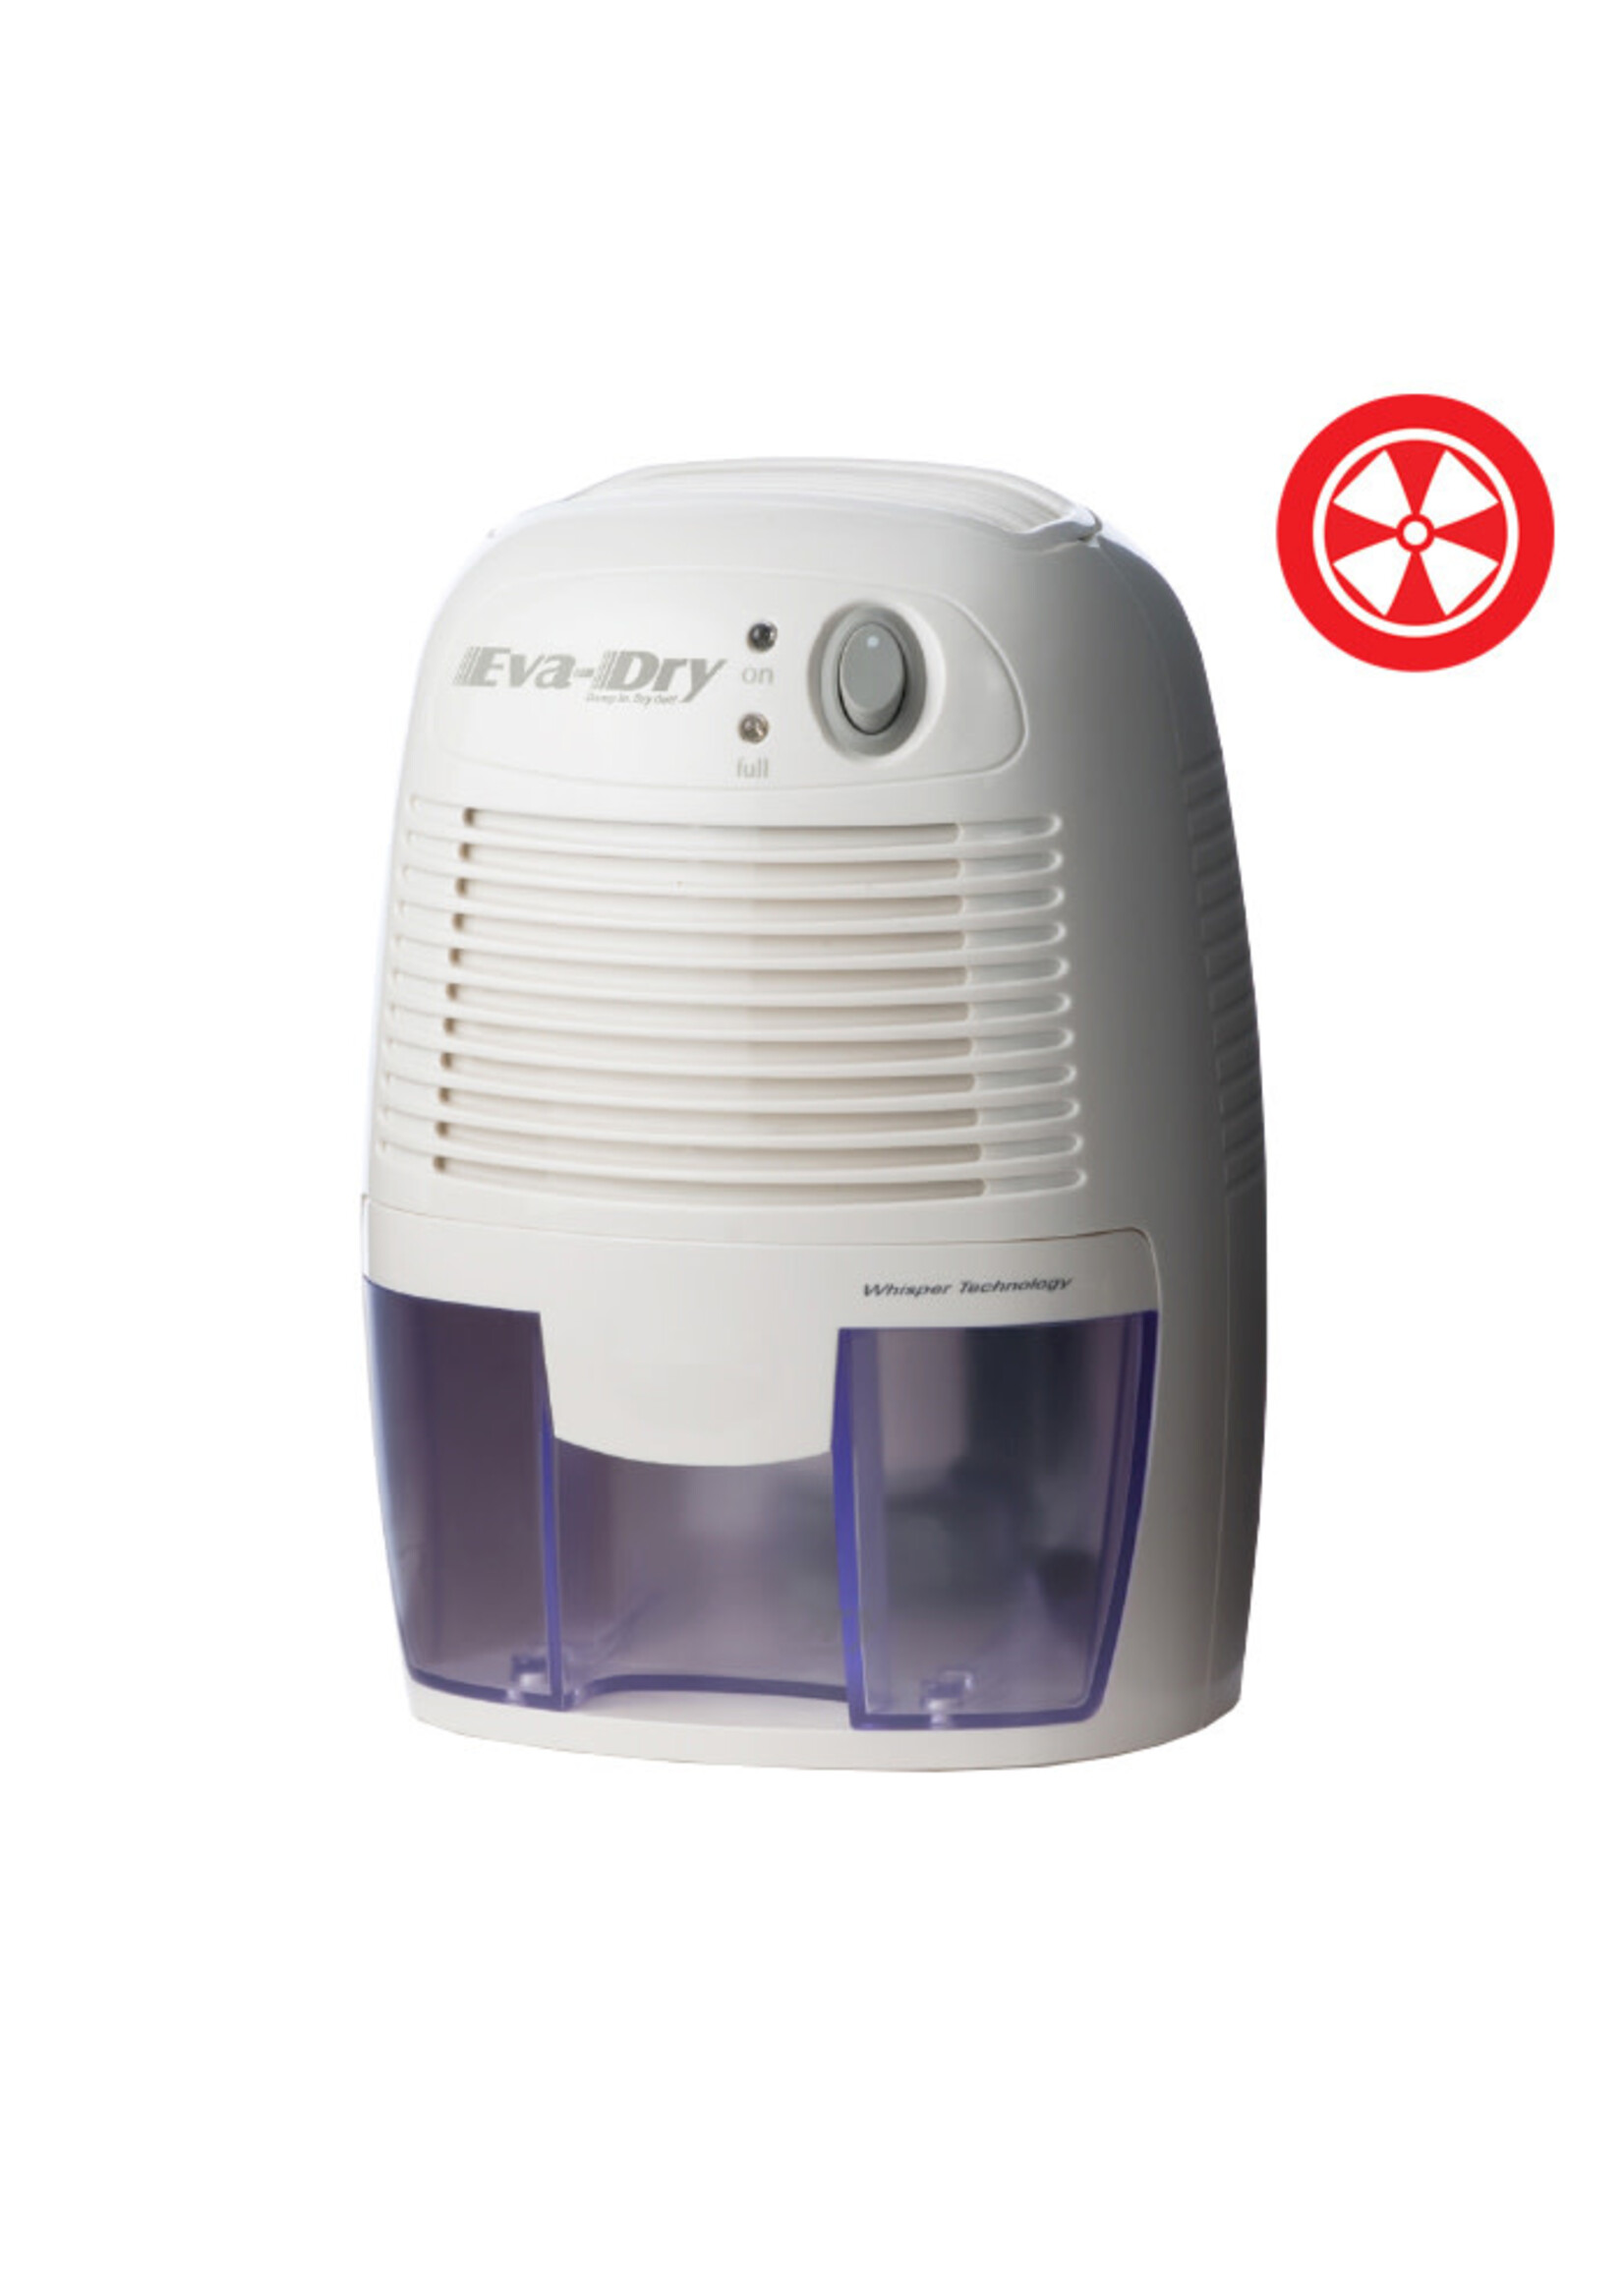 Eva-Dry Eva-Dry EDV-1100 Petite Mini-Dehumidifier